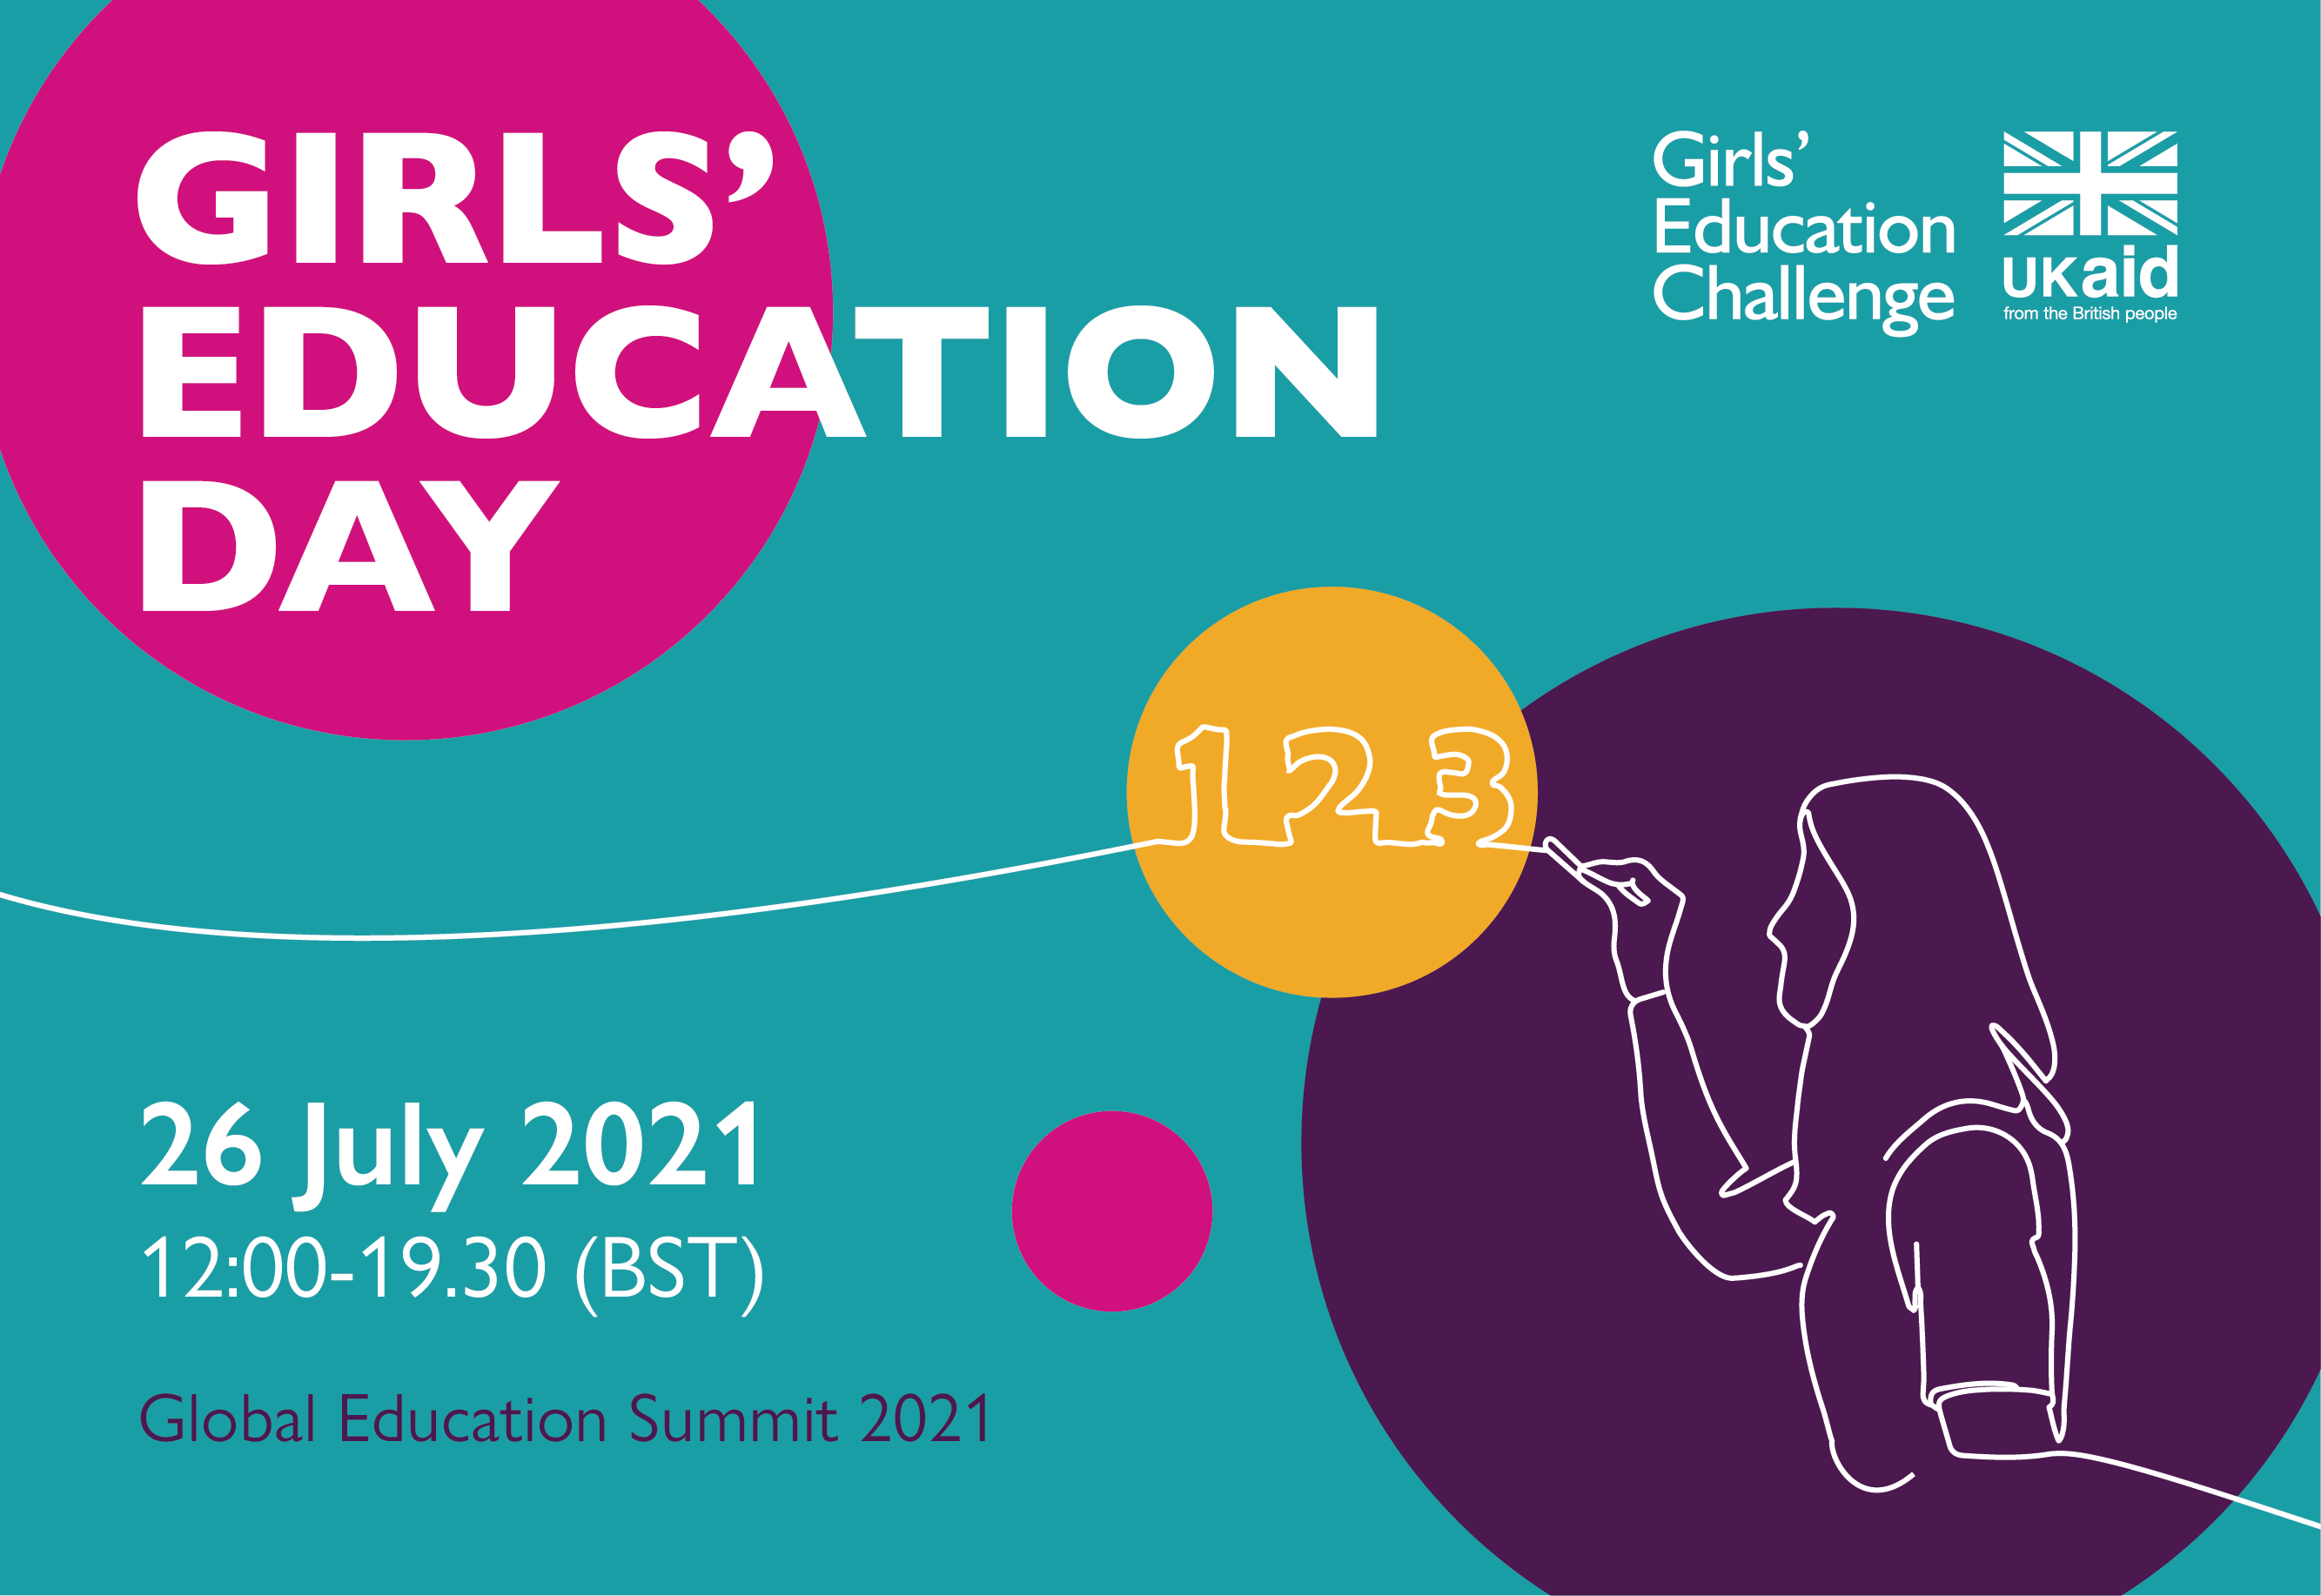 Girls' Education Day